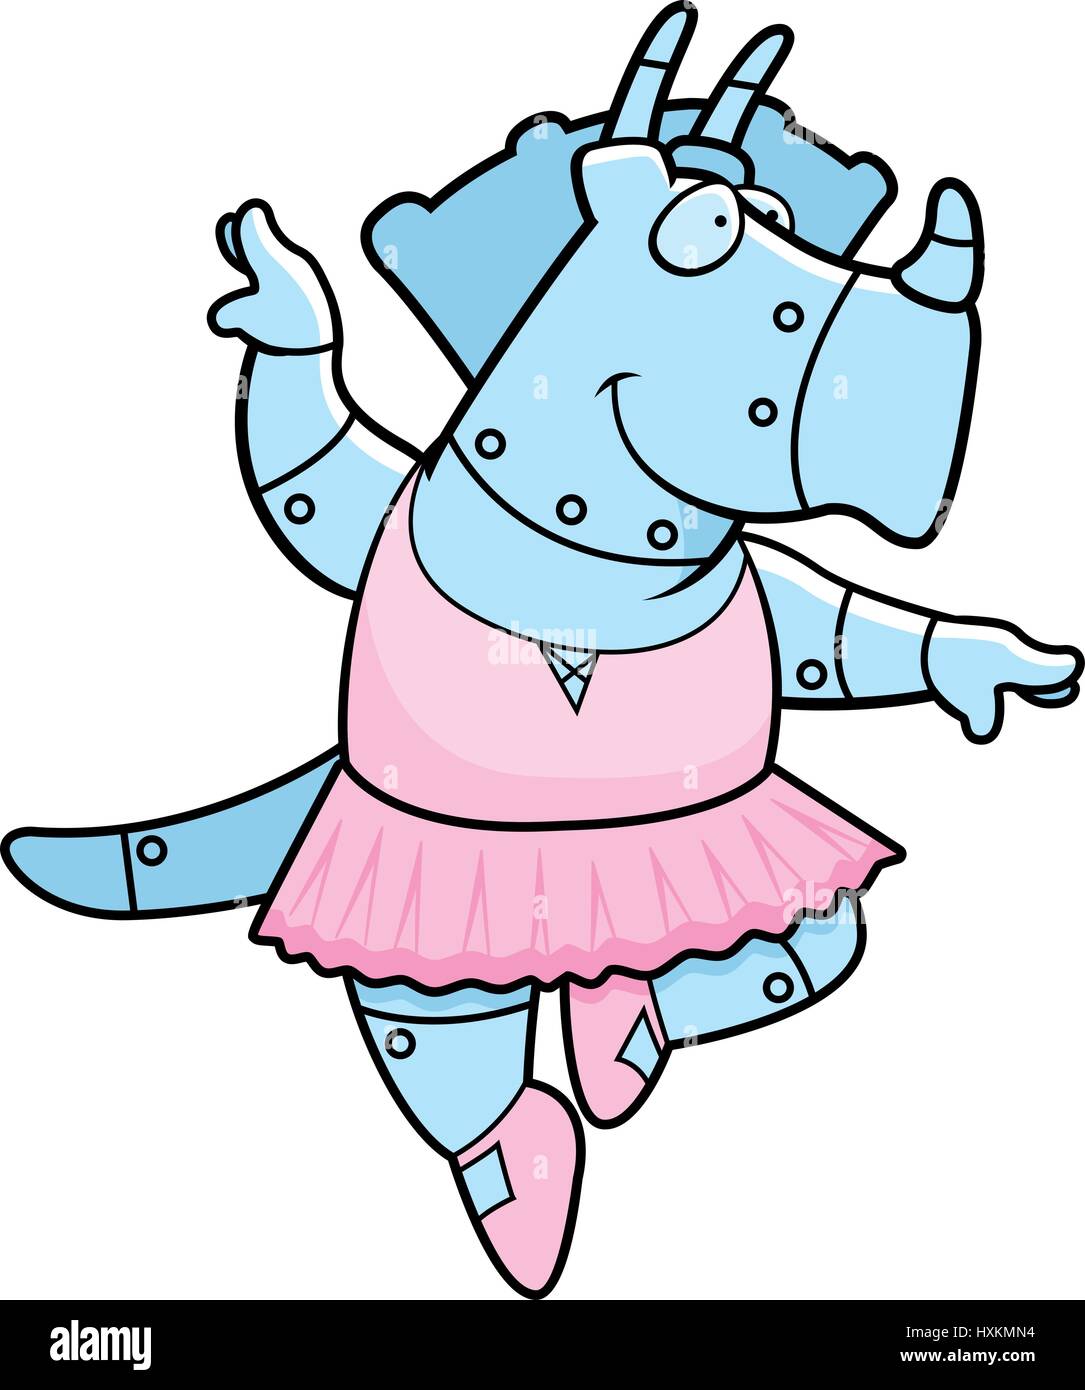 A cartoon illustration of a robot triceratops dinosaur ballerina dancing  Stock Vector Image & Art - Alamy